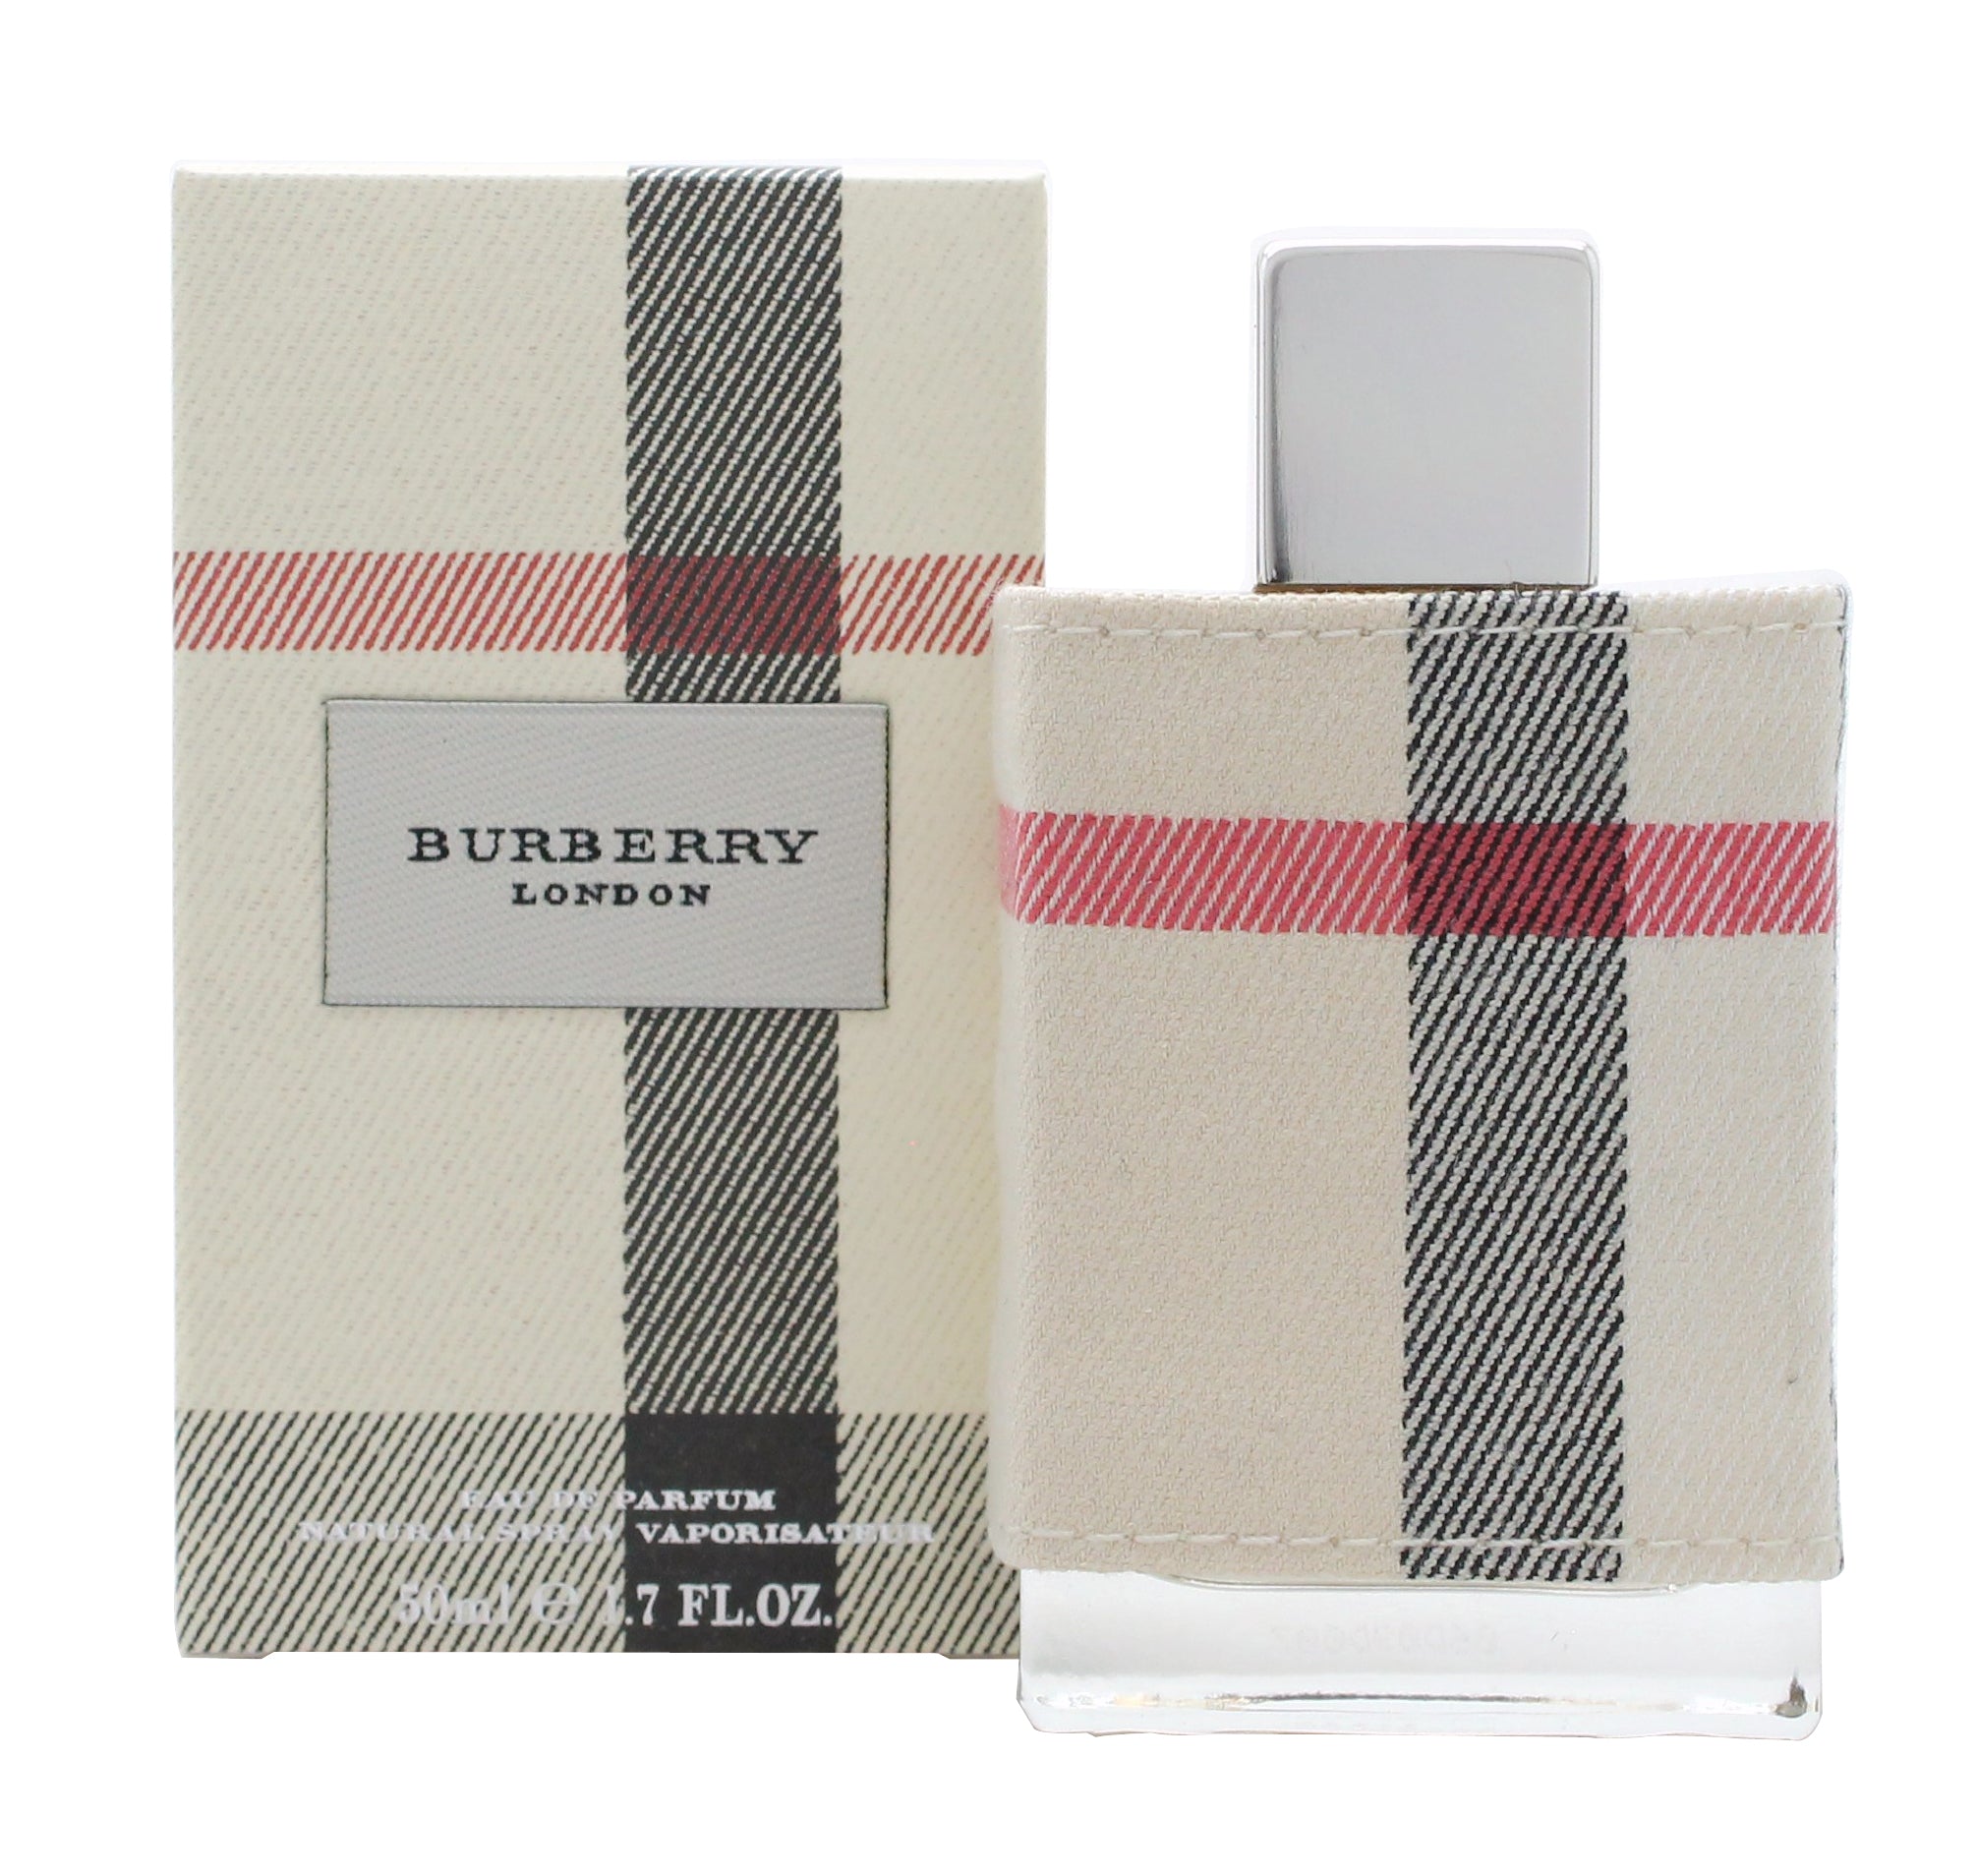 View Burberry London Eau de Parfum 50ml Spray information